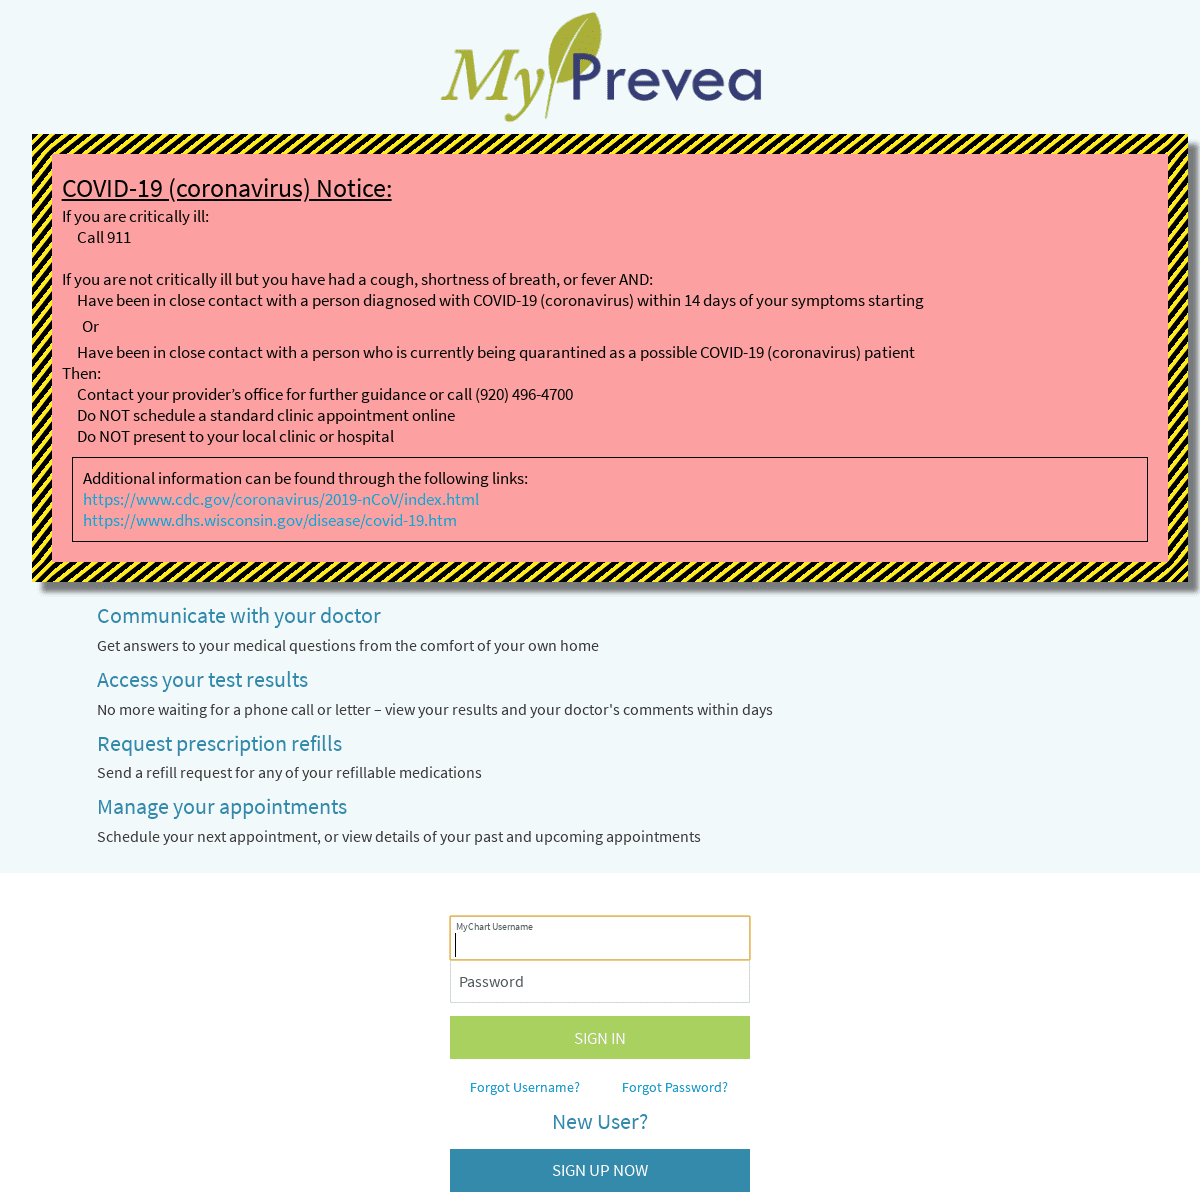 A complete backup of myprevea.com